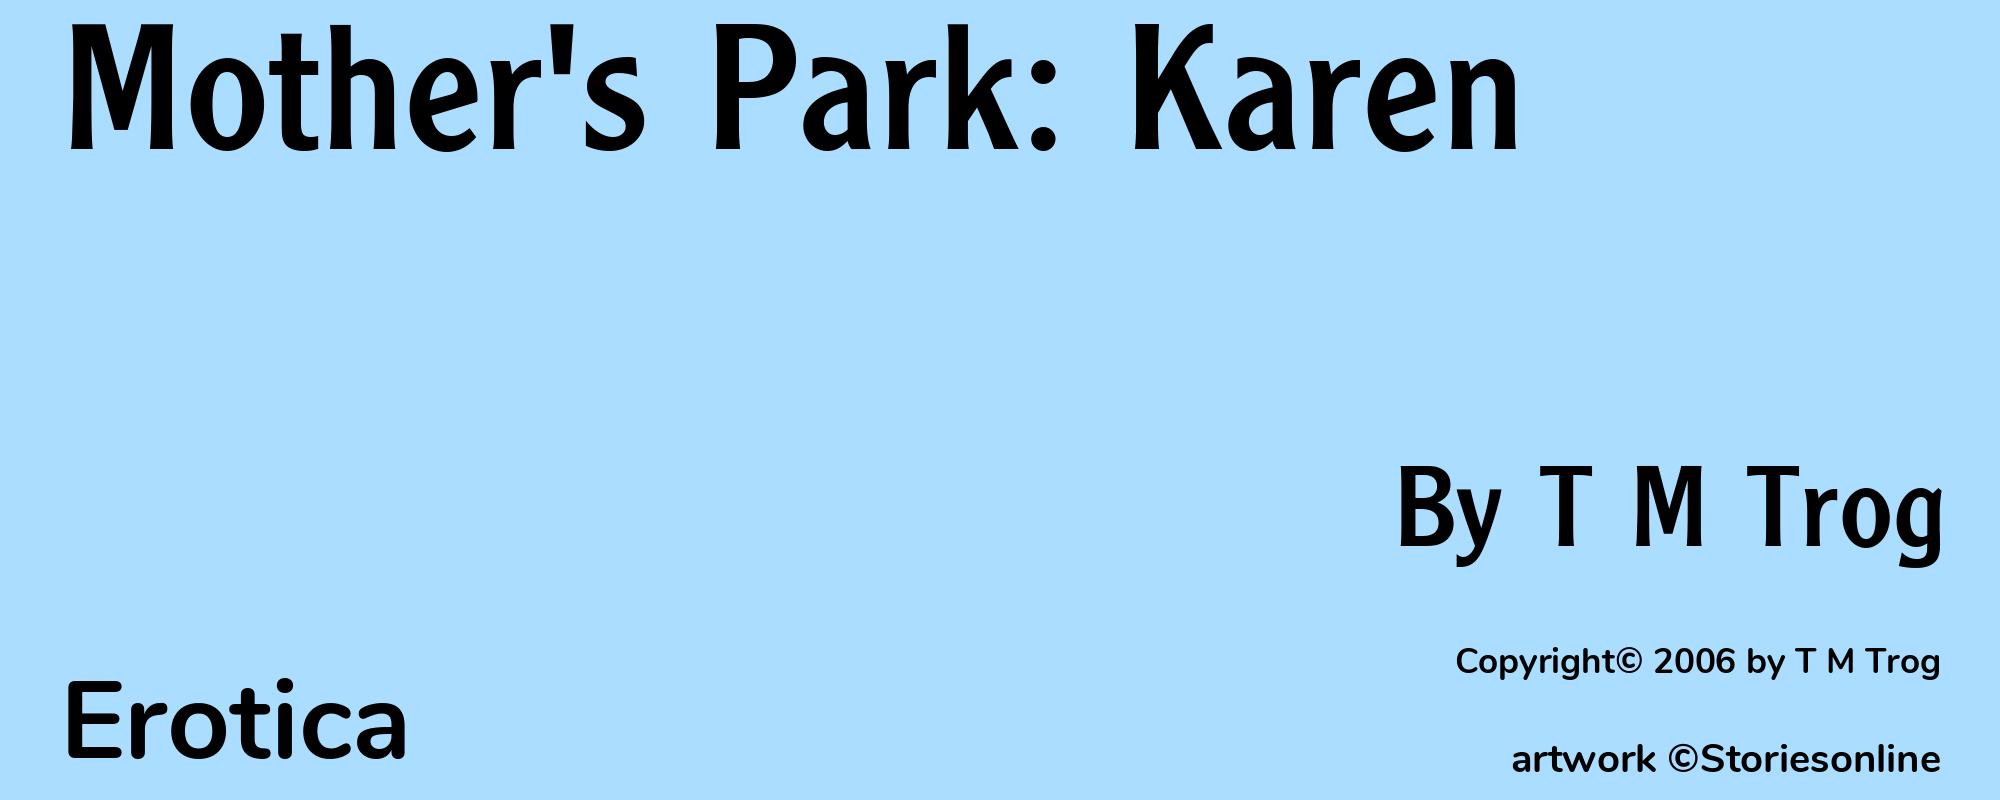 Mother's Park: Karen - Cover